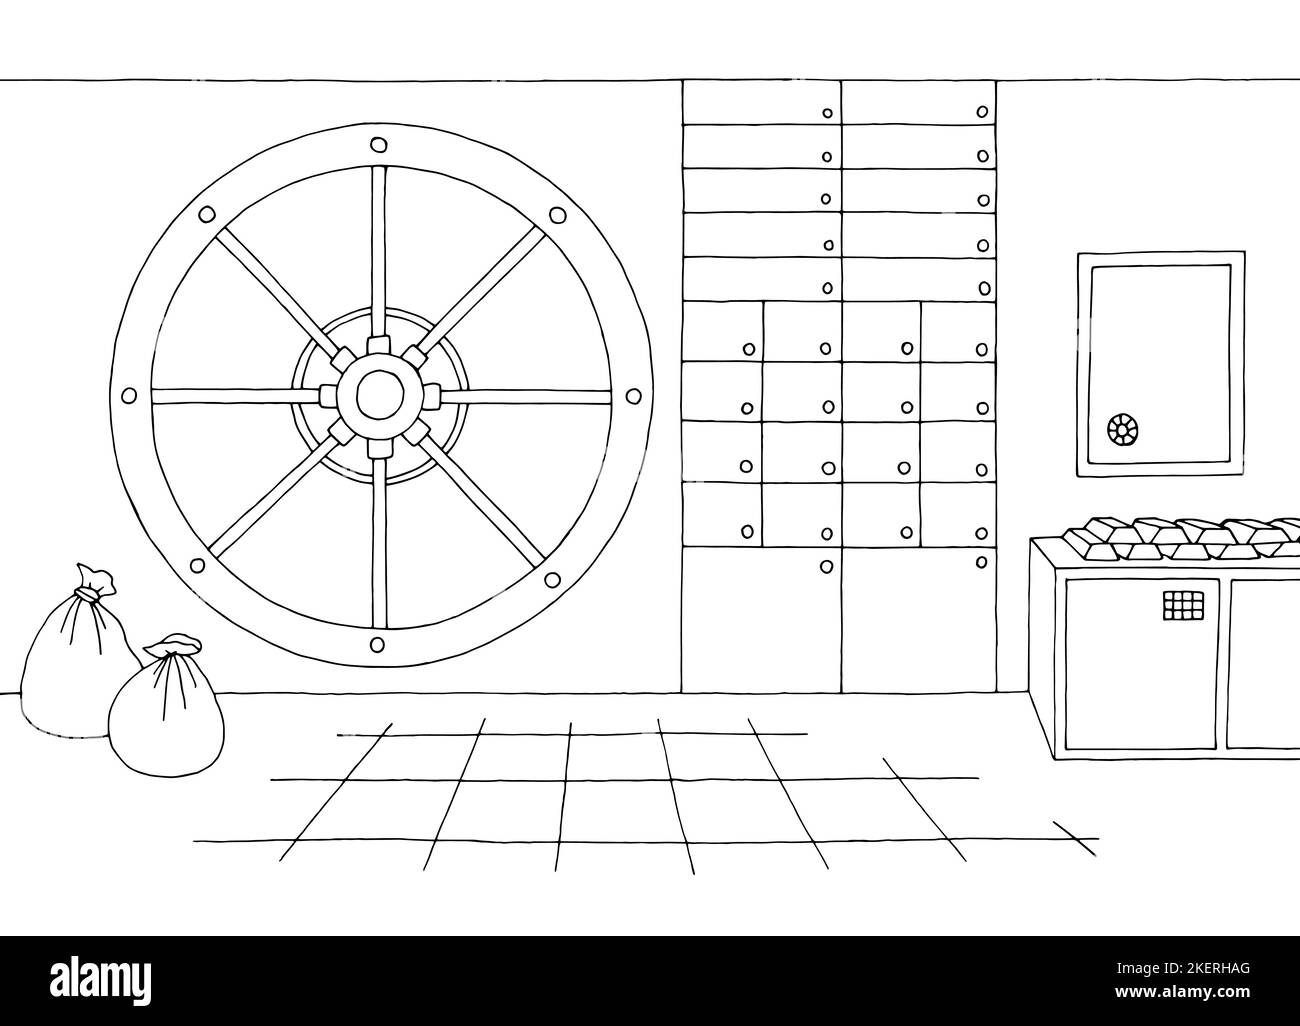 Bank vault safe storage interior graphic black white sketch illustration vector Stock Vector